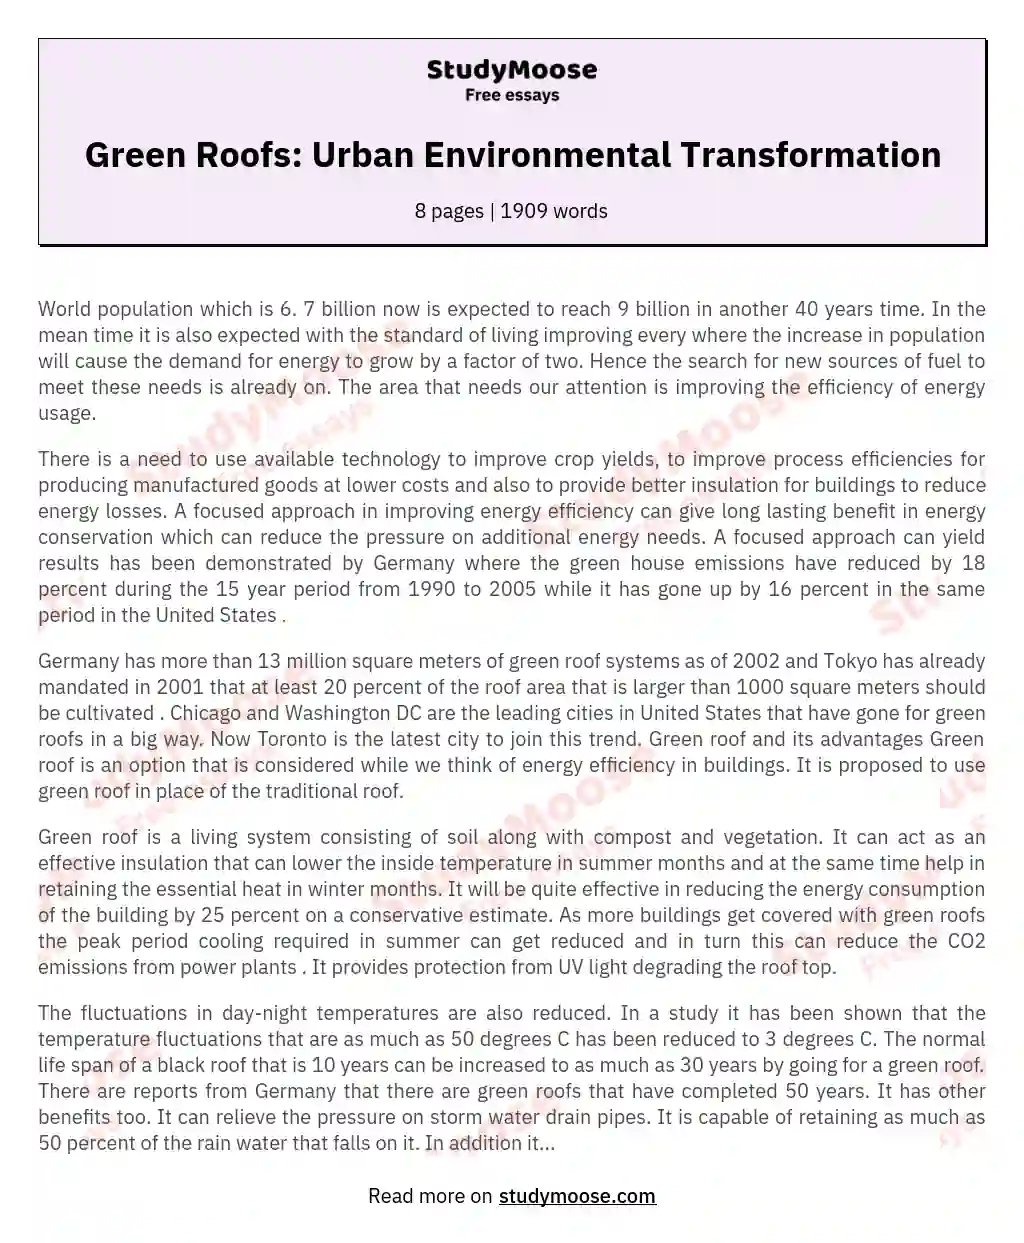 Green Roofs: Urban Environmental Transformation essay